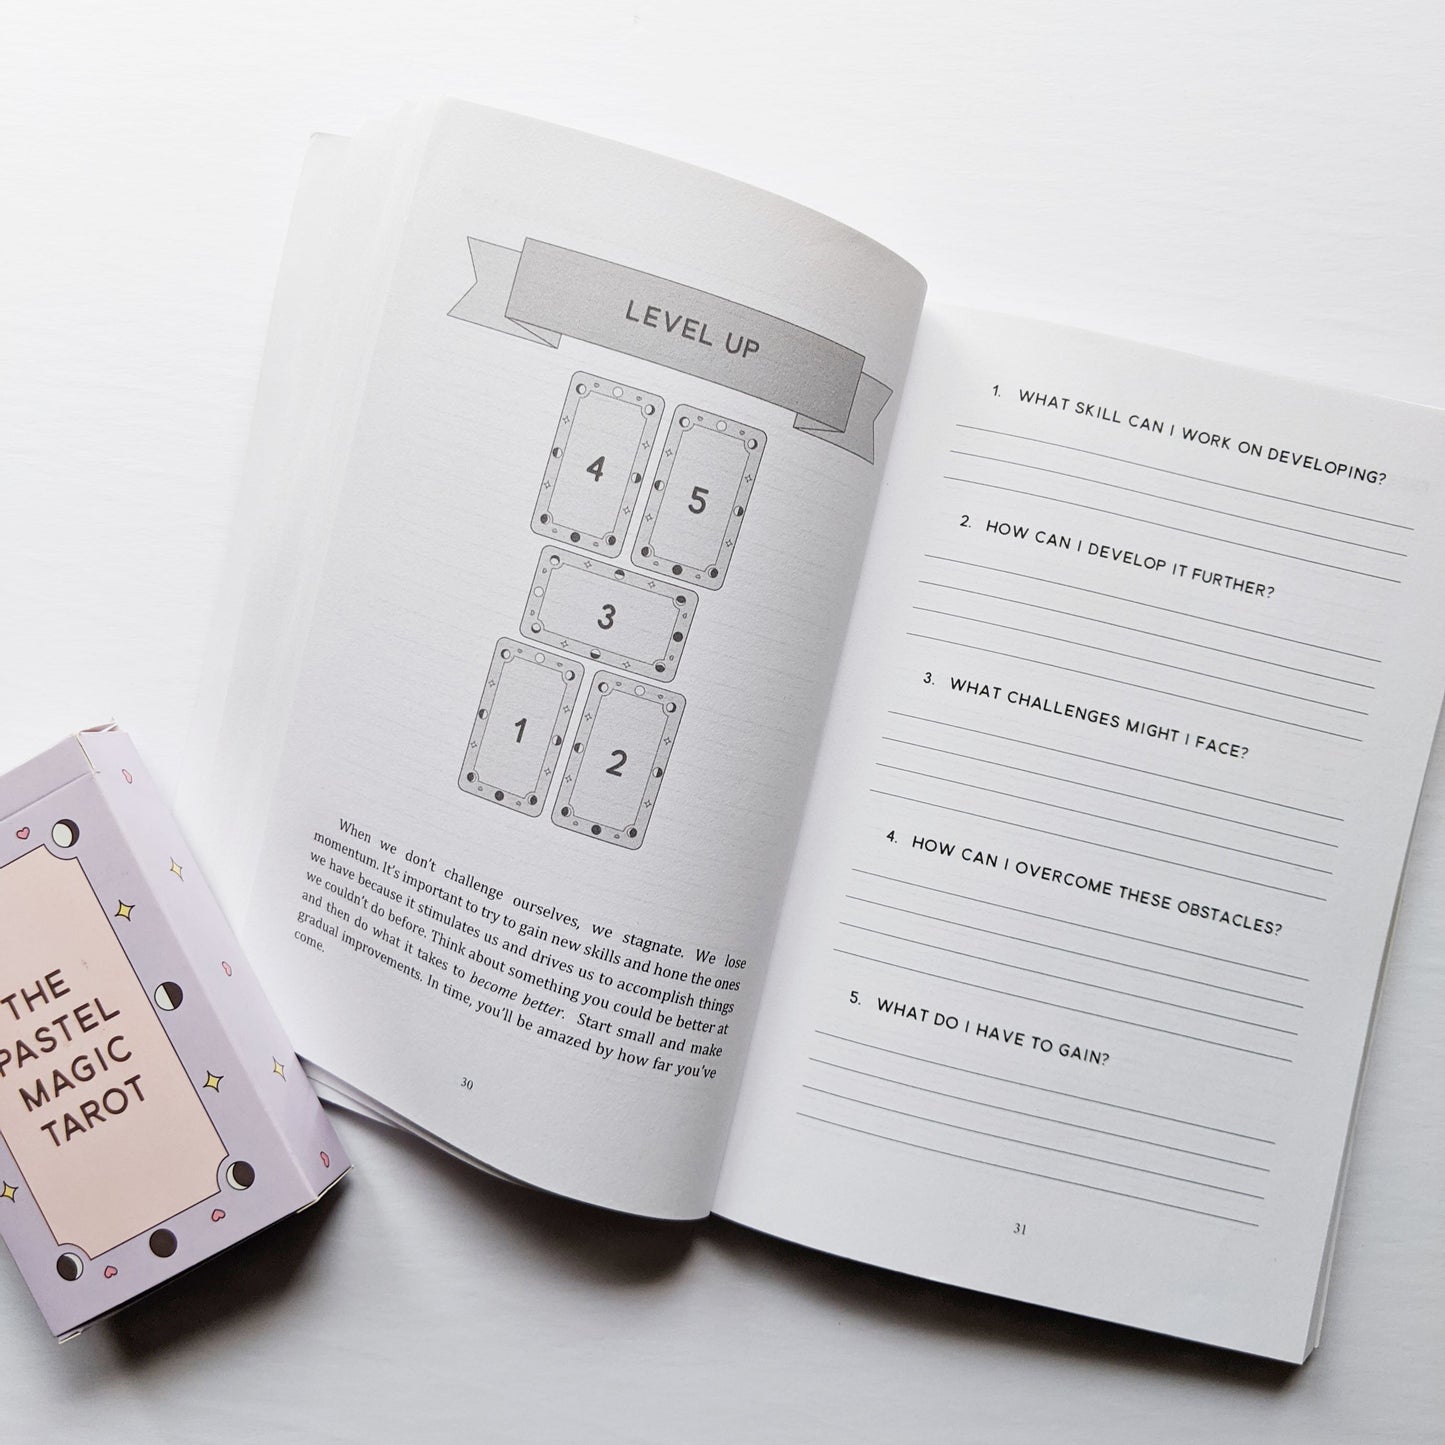 BUNDLE: The Pastel Magic Tarot Third Edition PLUS the Pastel Magic Book of Tarot Spreads